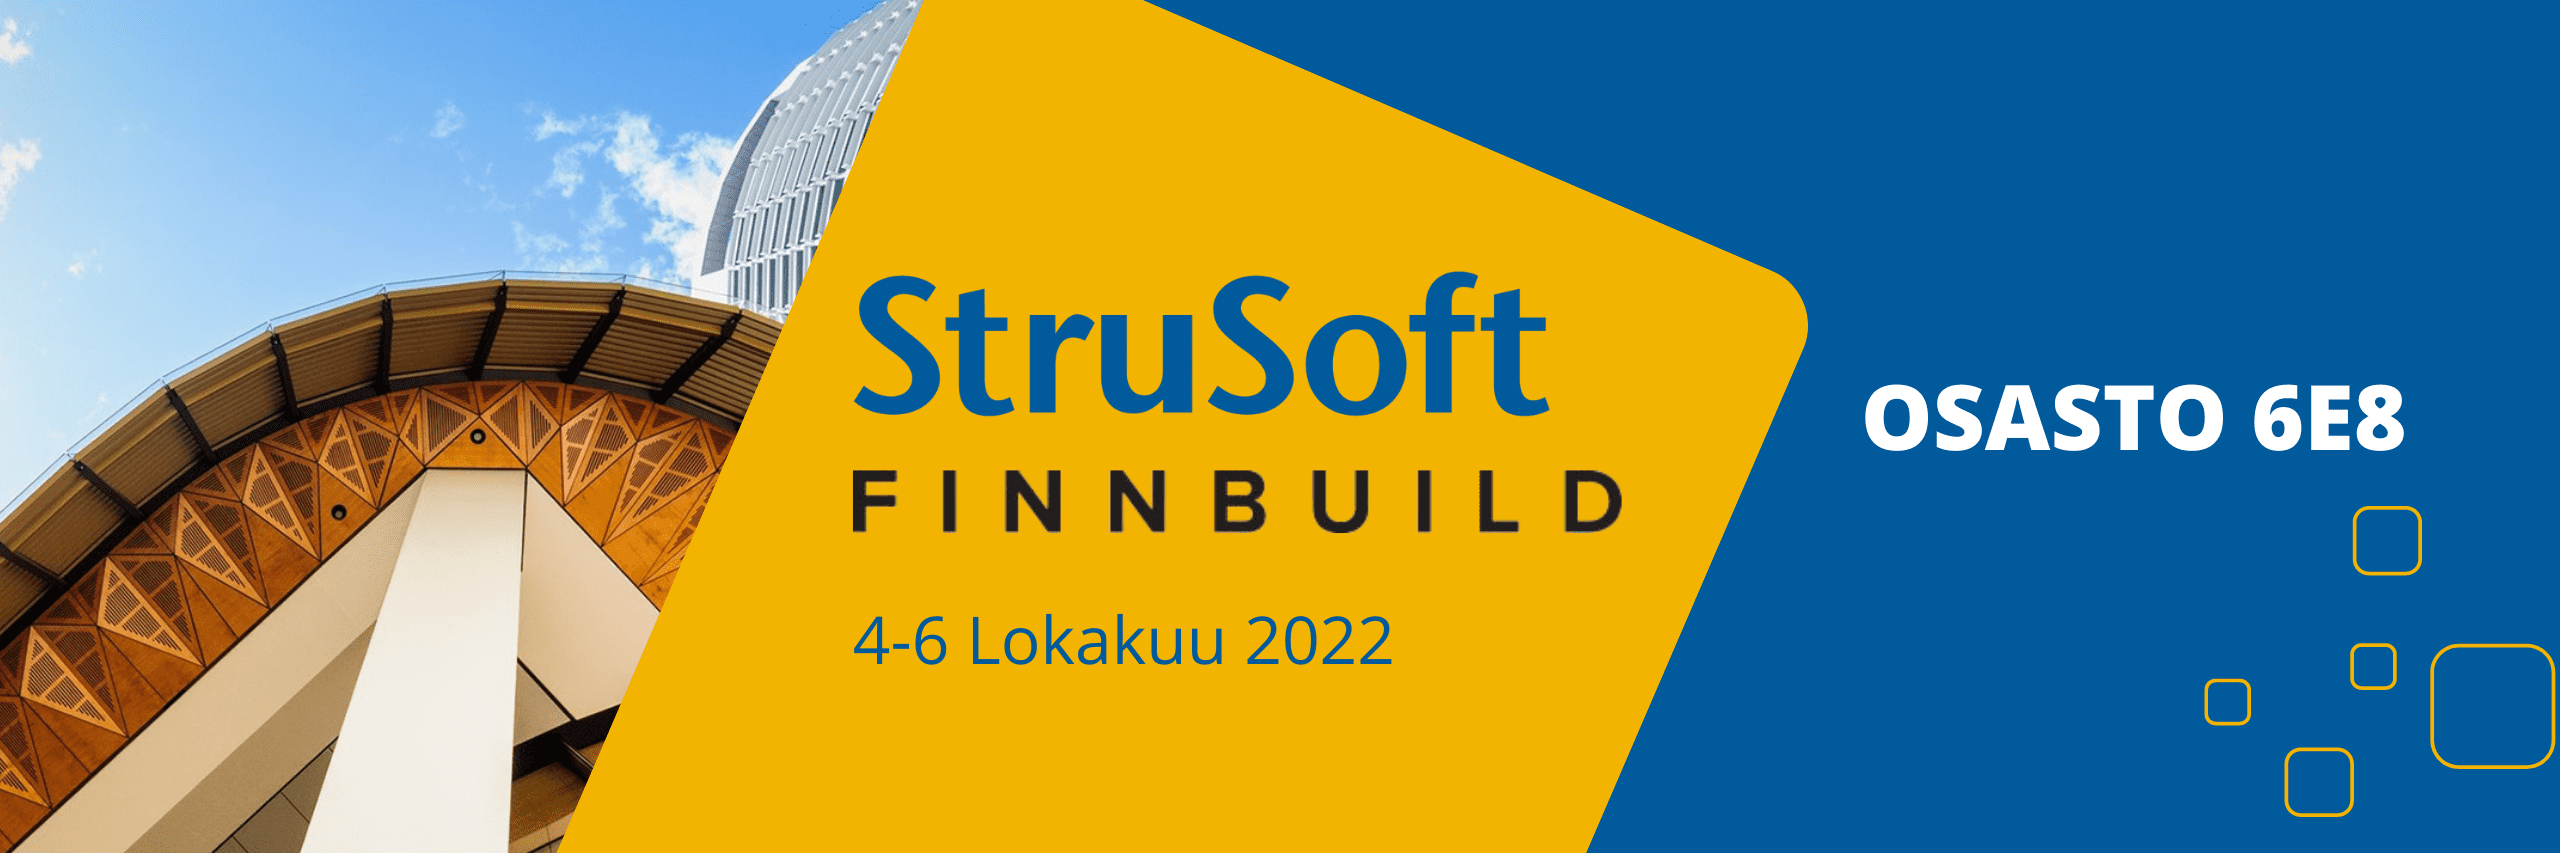 StruSoft @ FinnBuild 2022